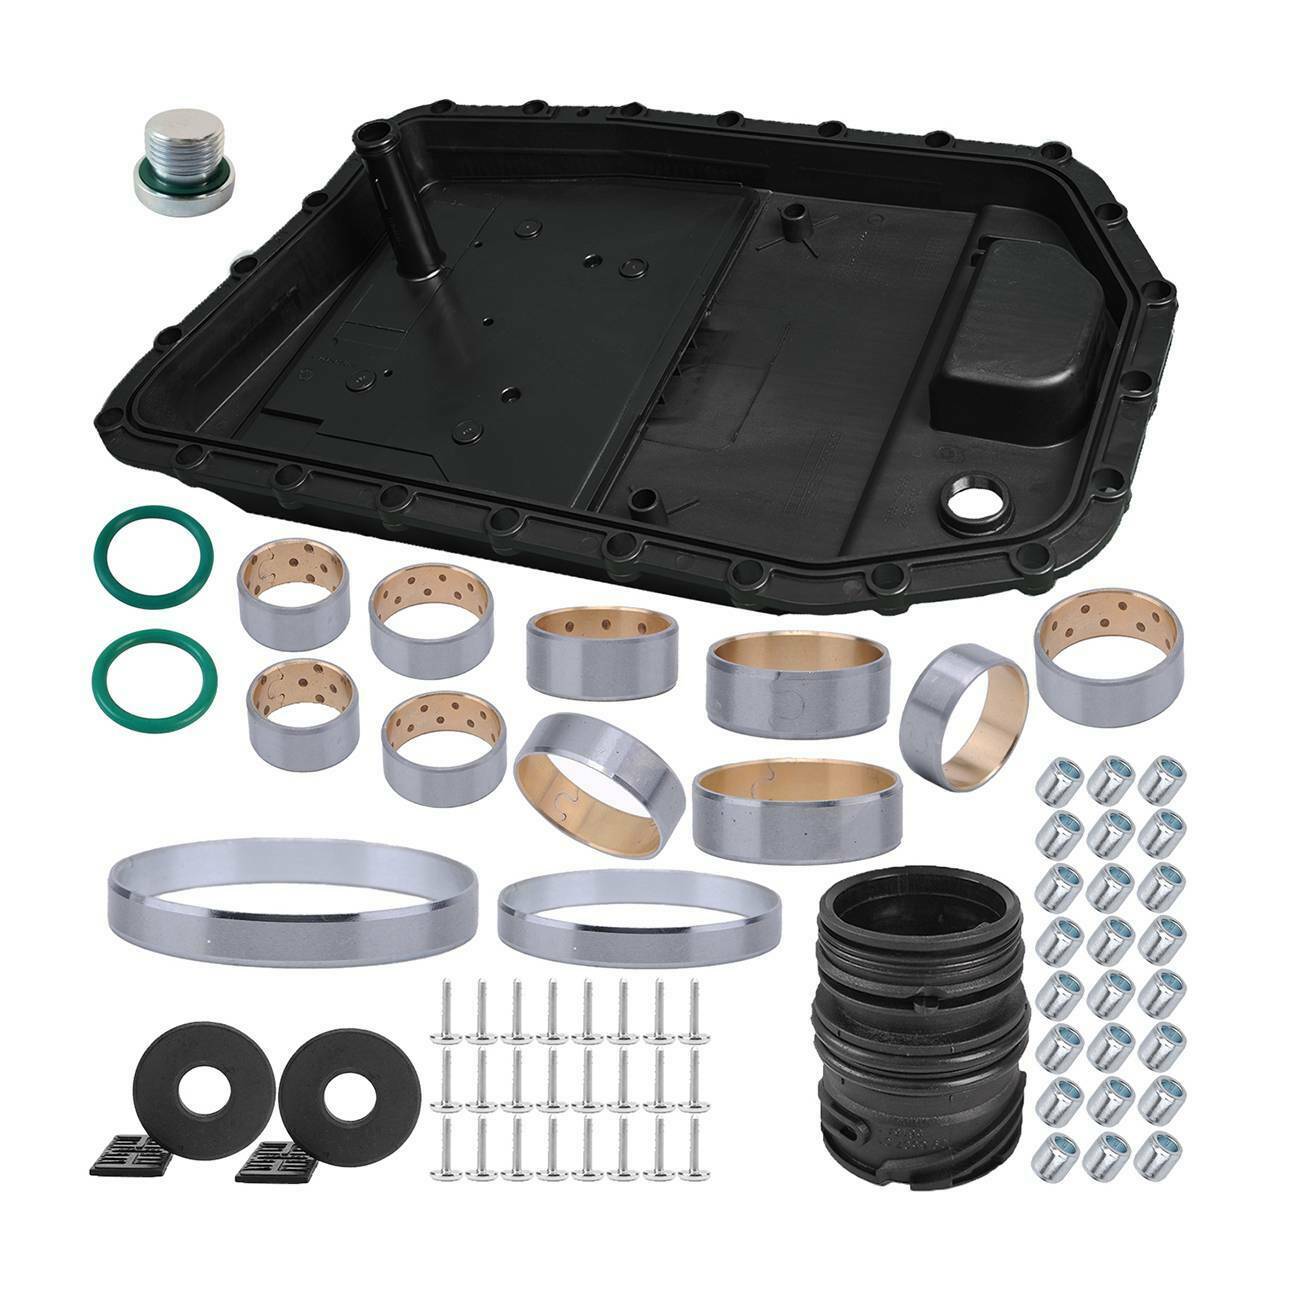 Transmission Oil Pan + Repair Kit + Sealing Sleeve + Drain Plug for BMW German Made